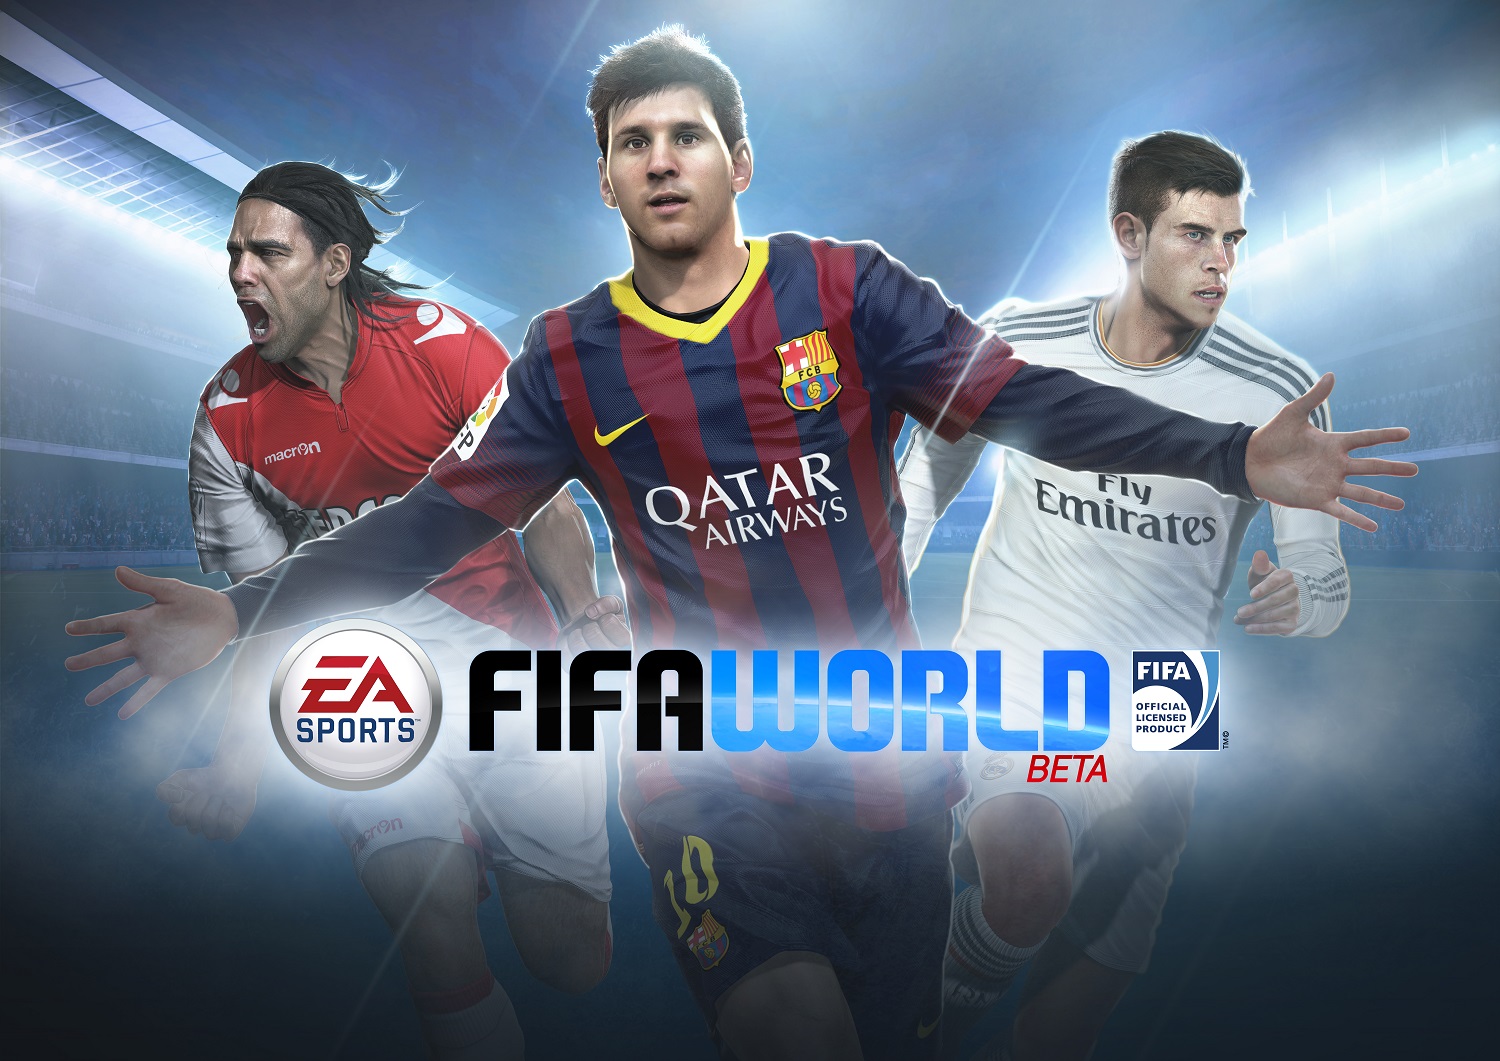 Free-To-Play: EA SPORTS FIFA World geht weltweit in die offene Betaphase